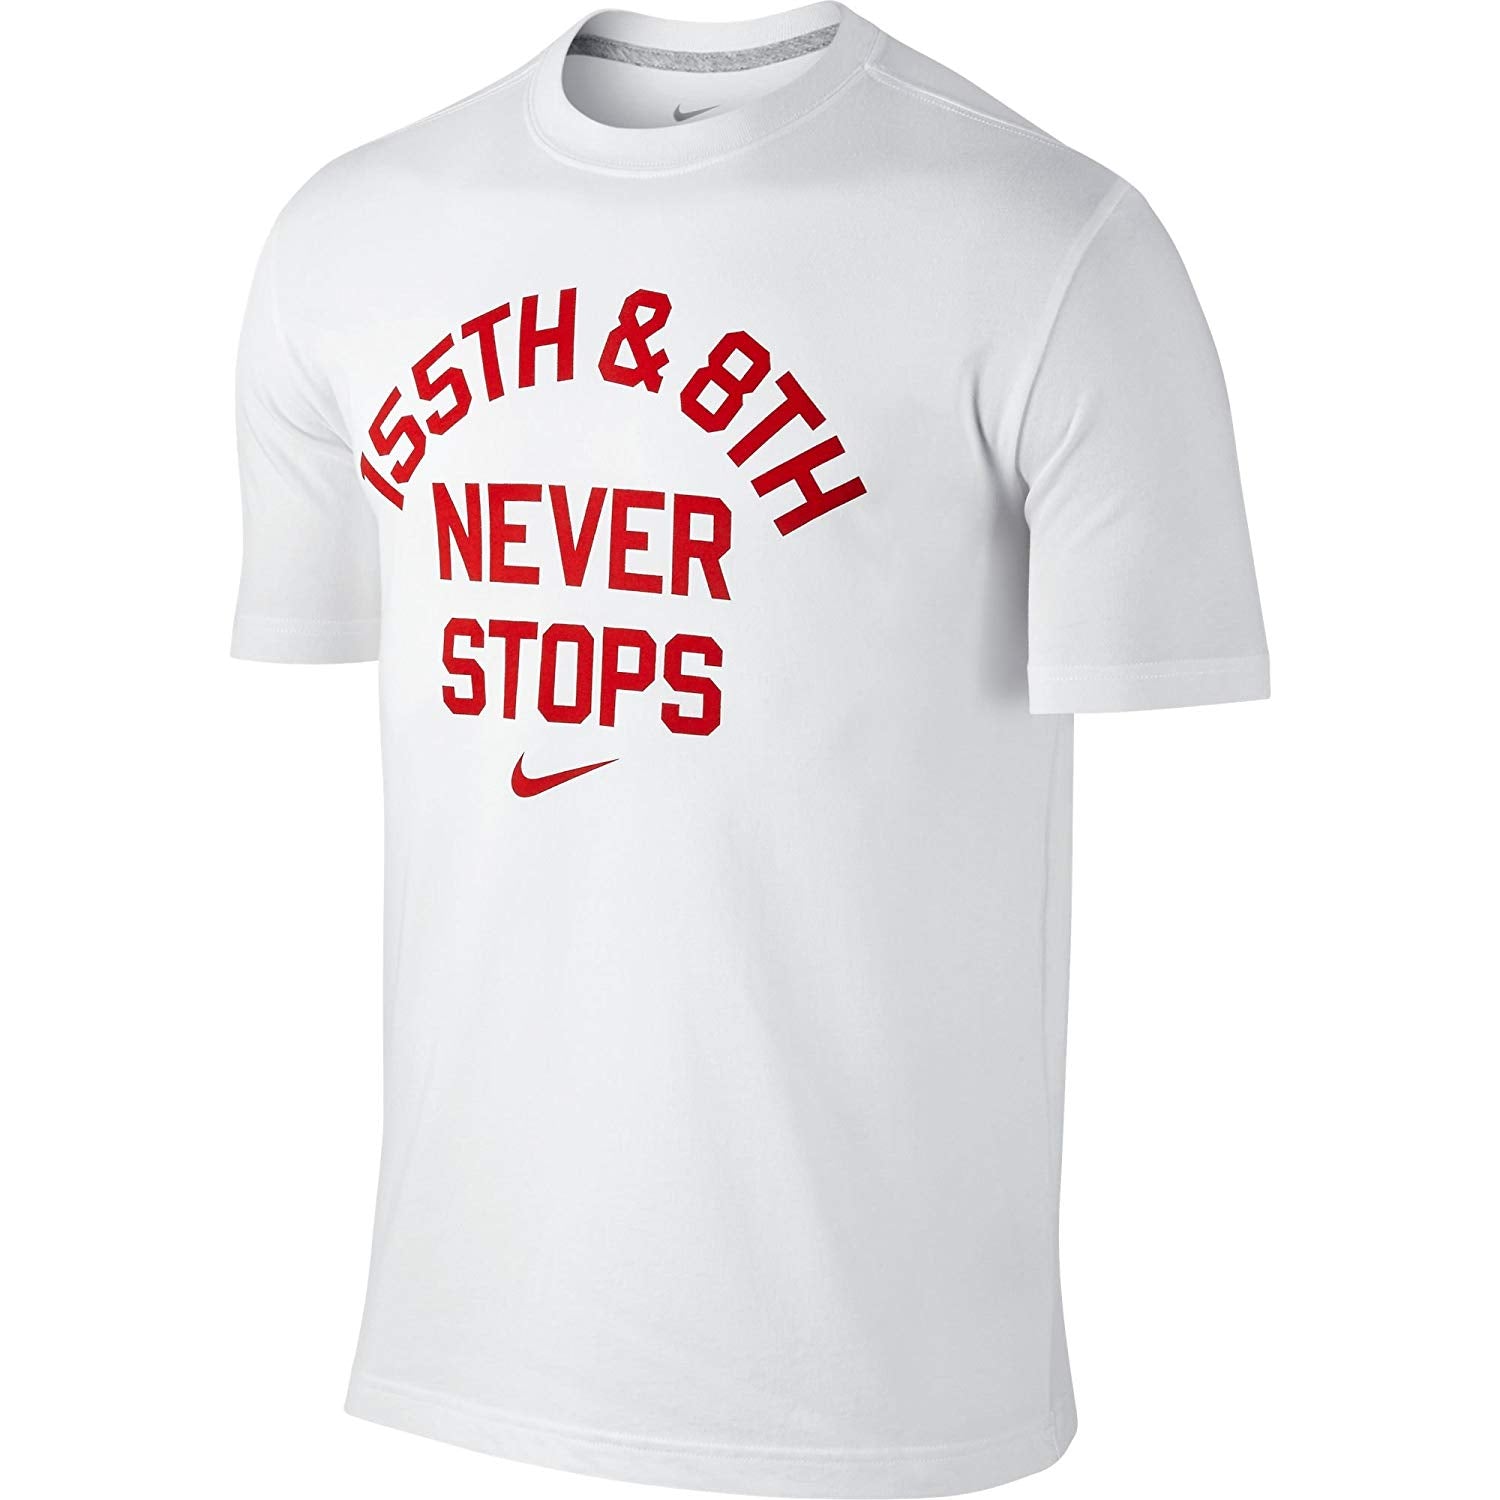 Nike Mens 155Th 8Th Never Stops Print T-Shirt